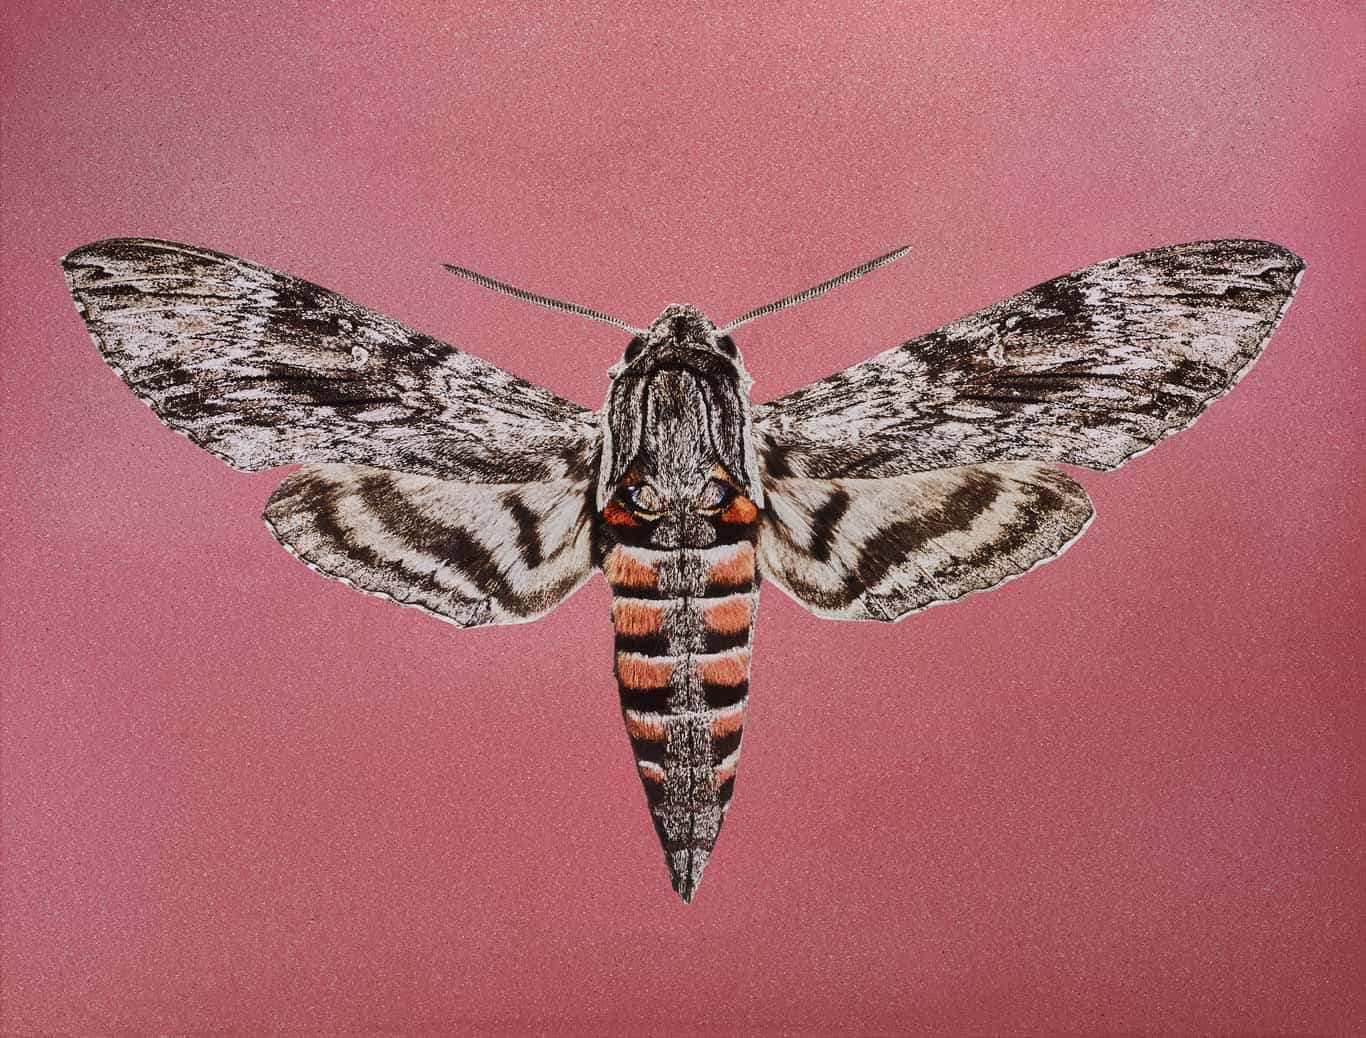 Convolvulus hawk moth